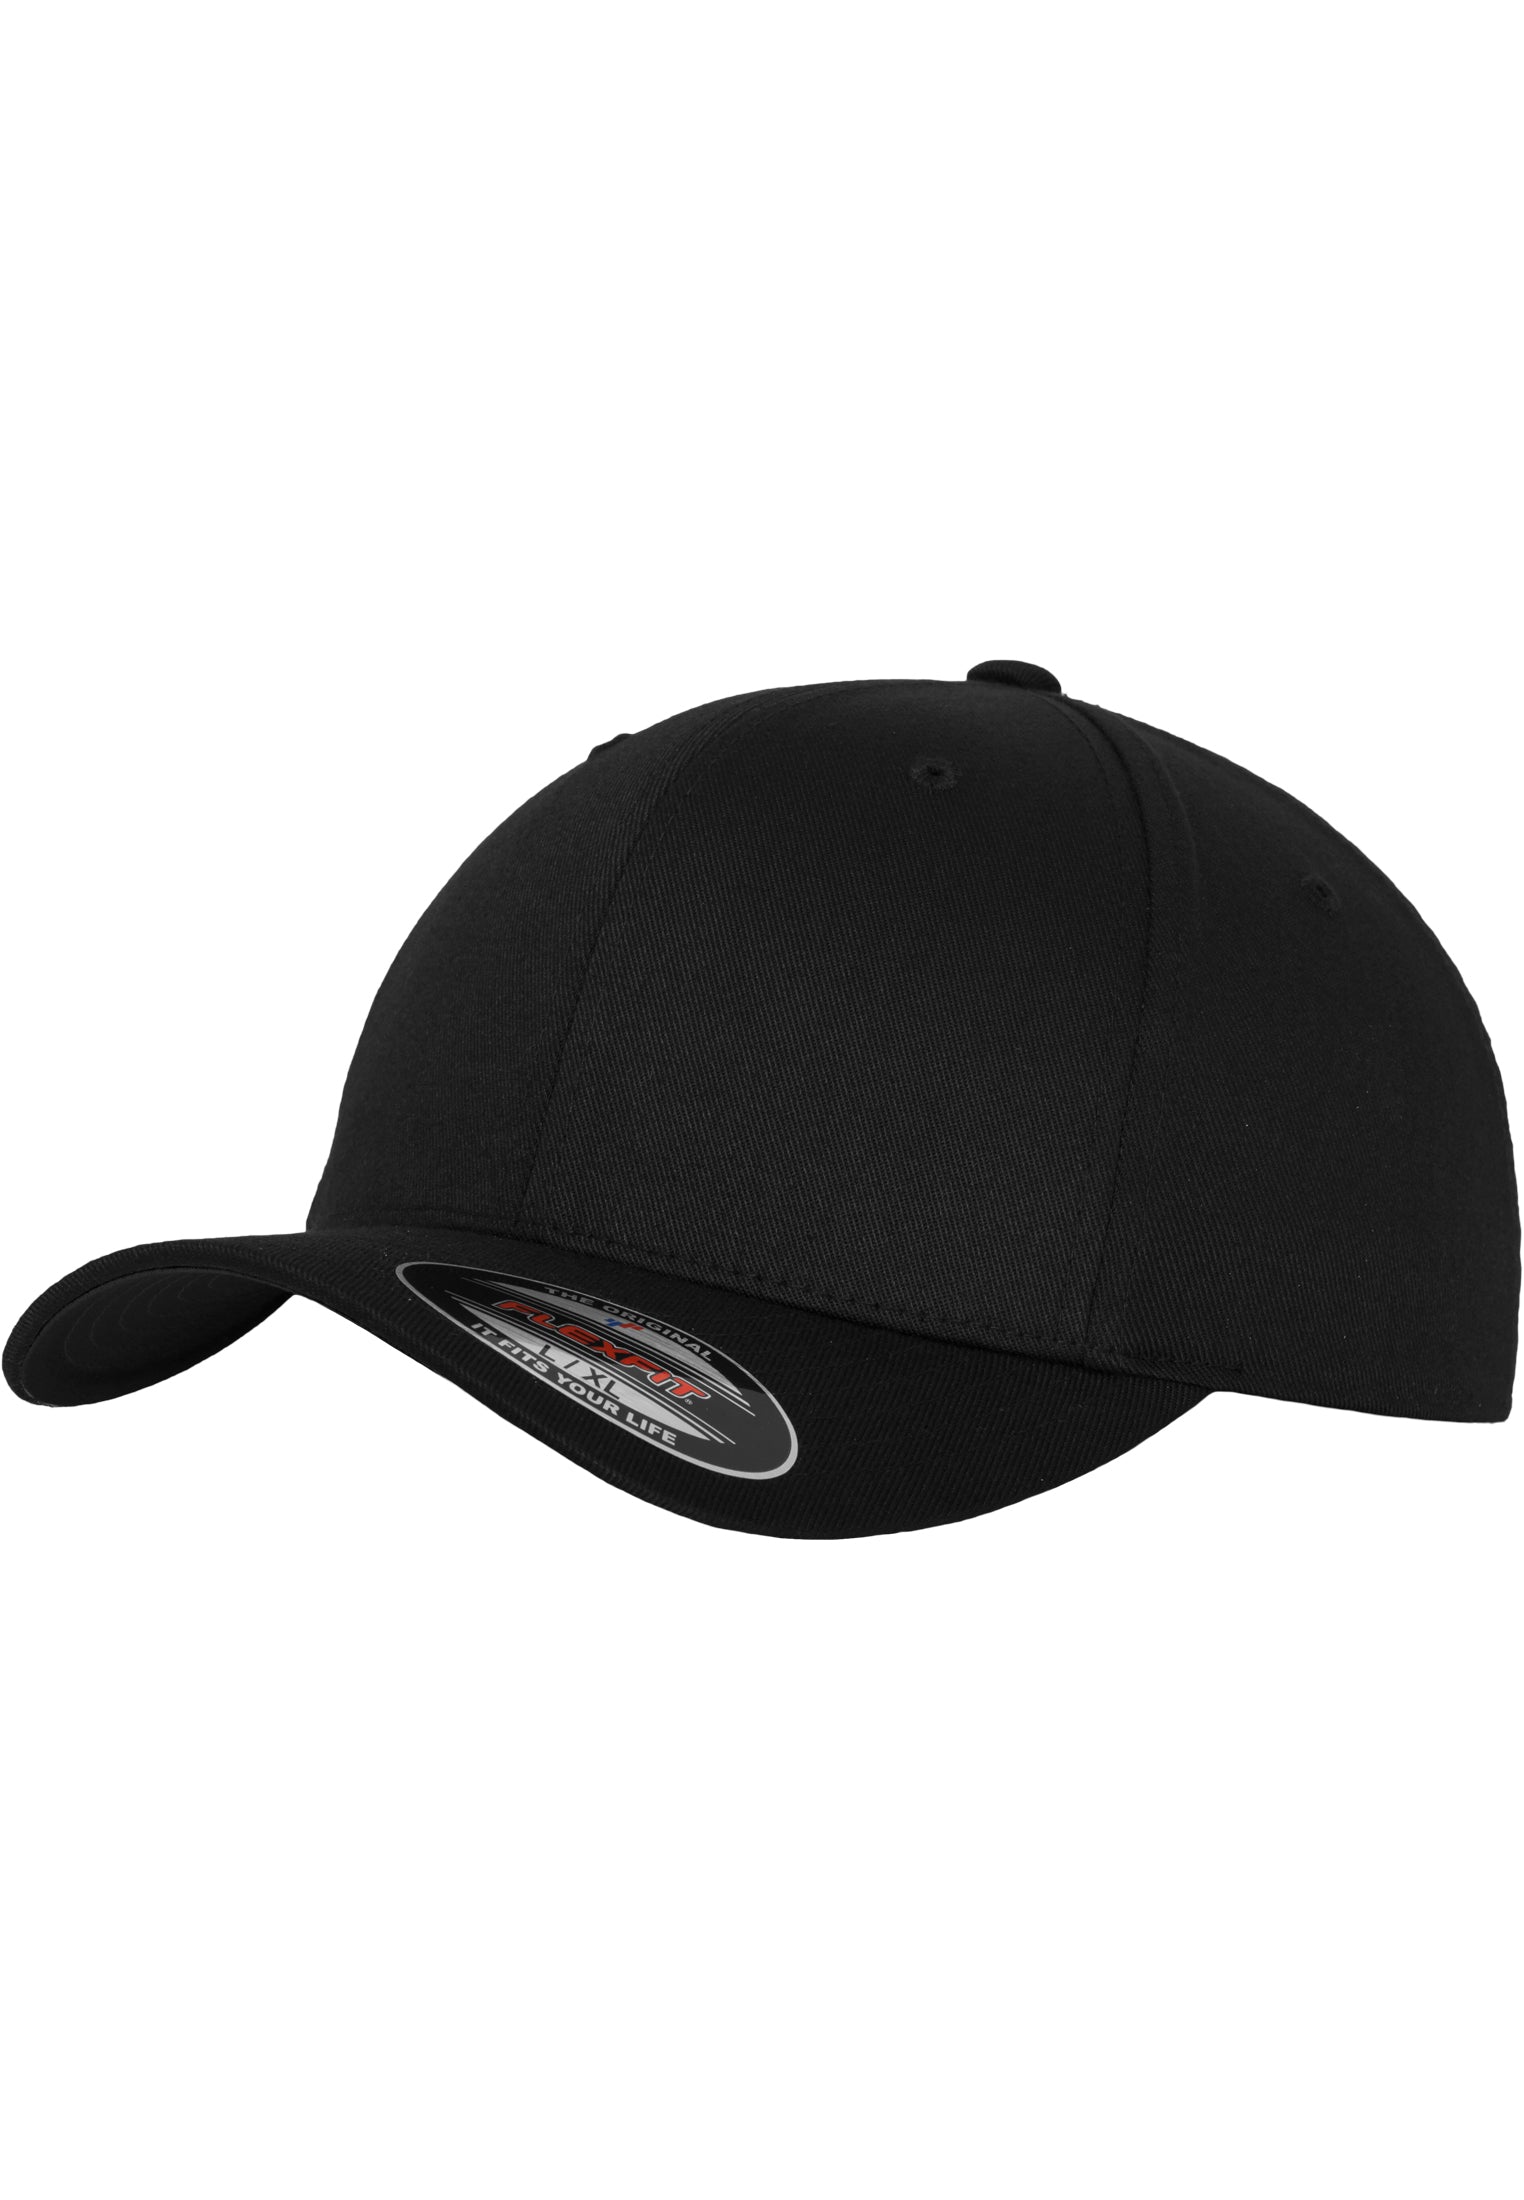 Flexfit Cap - Black/Black - Headz Up 